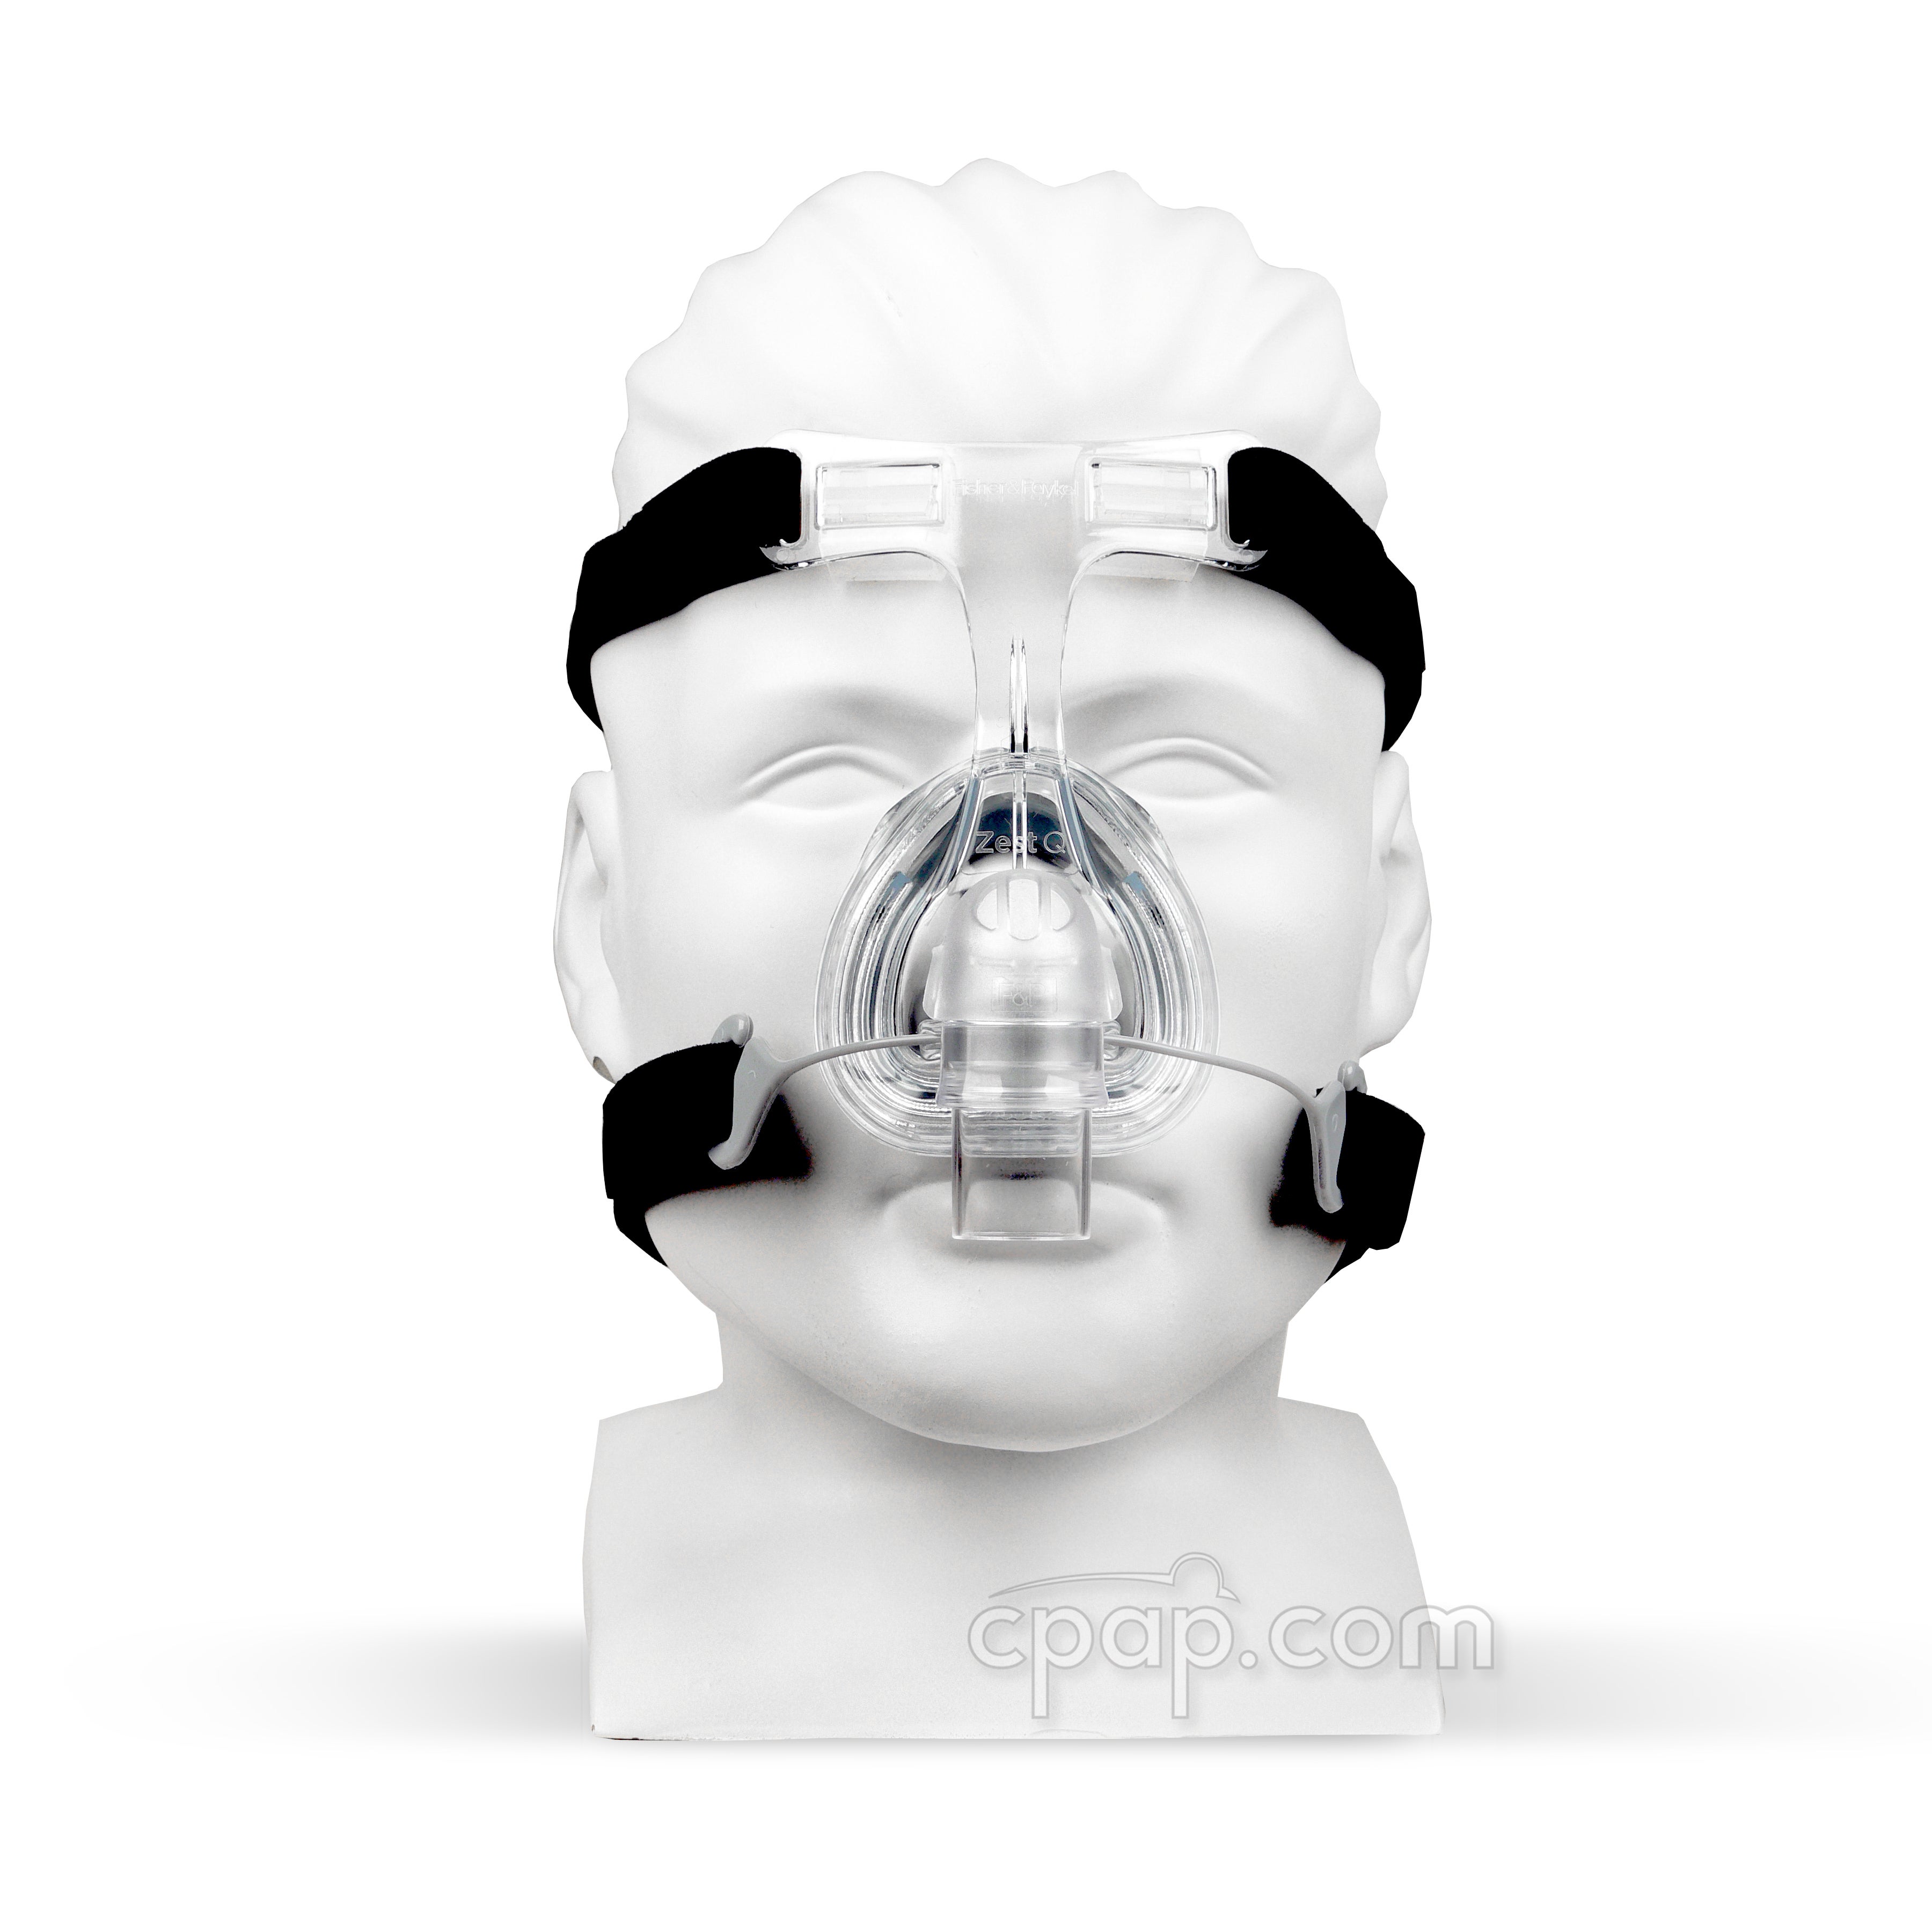 Zest Q Nasal CPAP Mask with Headgear